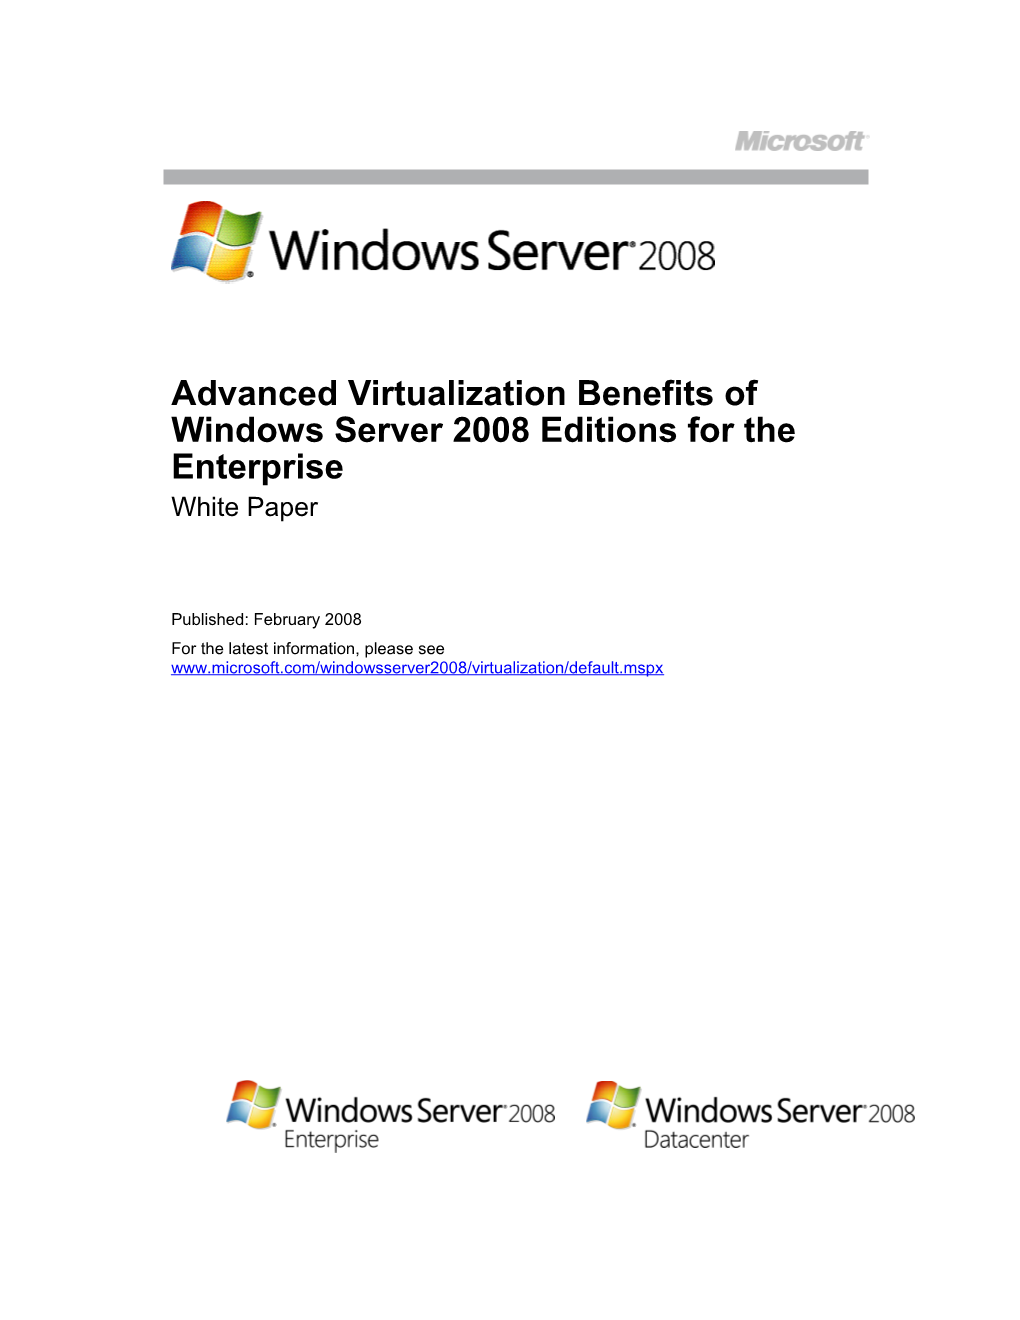 Windows Server 2008 Advanced Virtualization Benefits White Paper